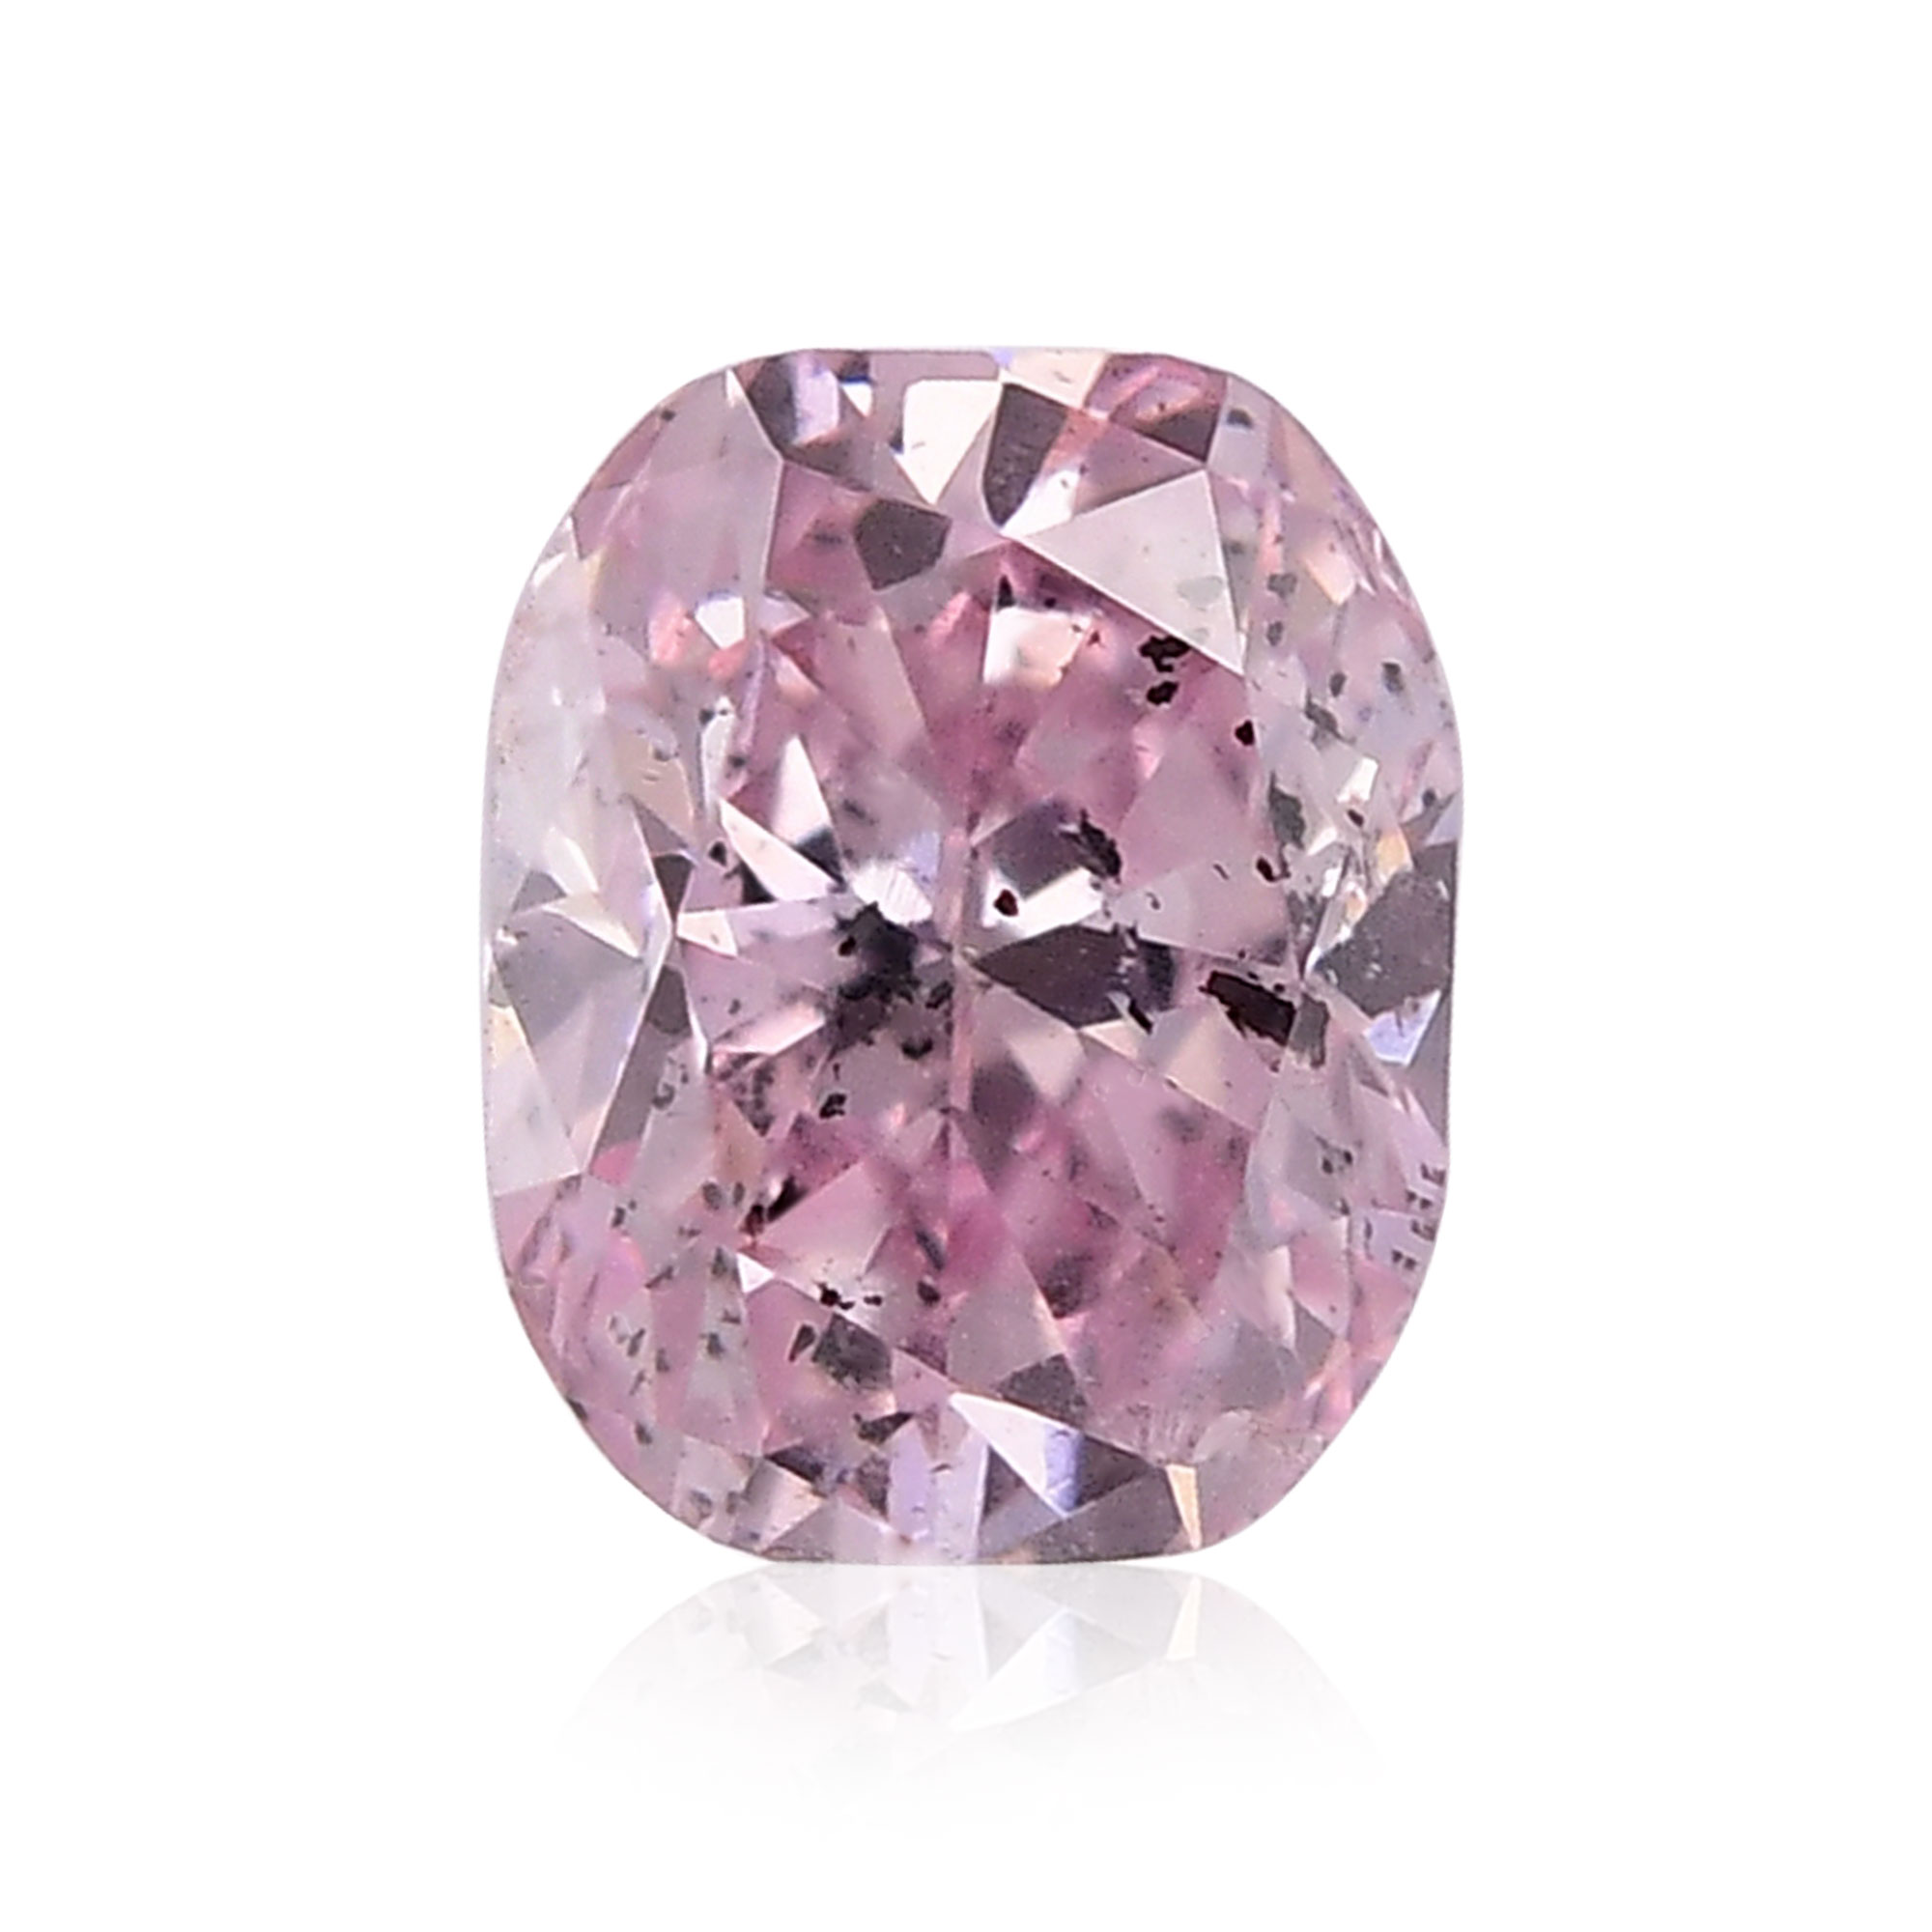 0.15 carat, Fancy Purplish Pink Diamond, Cushion Shape, (I1) Clarity, GIA,  SKU 386736